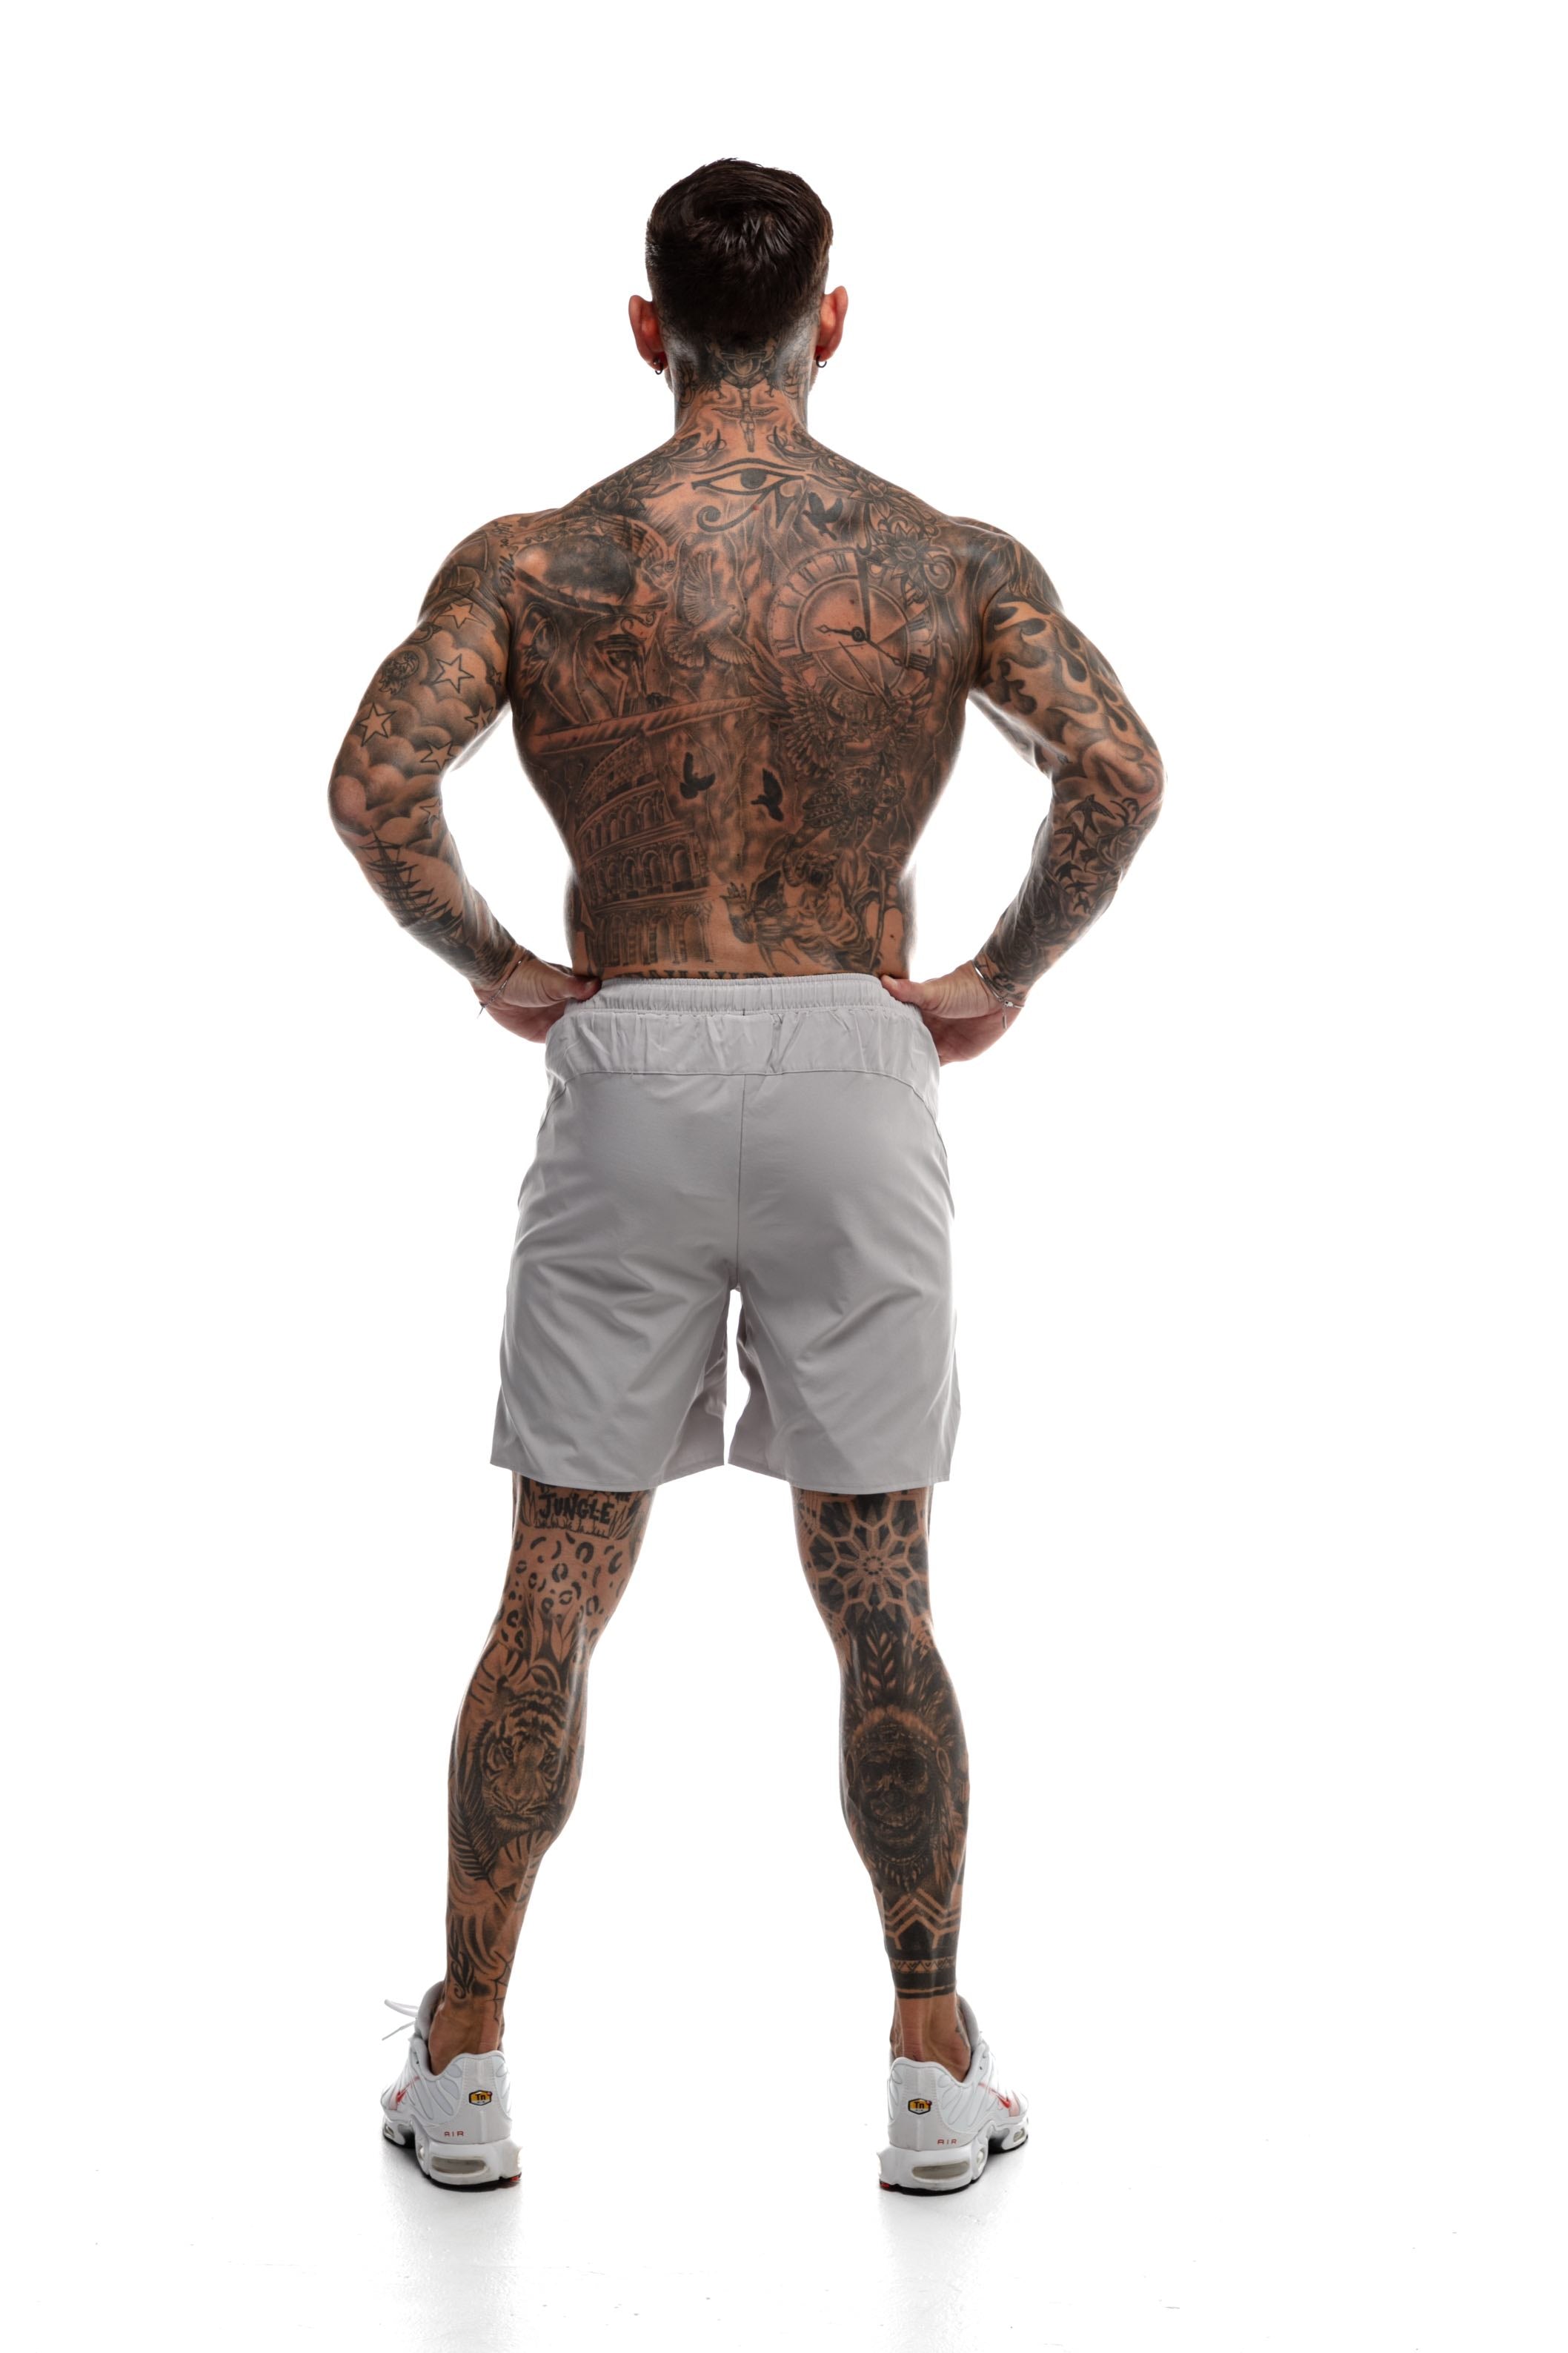 GymFreak Mens Fusion Shorts - Light Grey - 7 inch